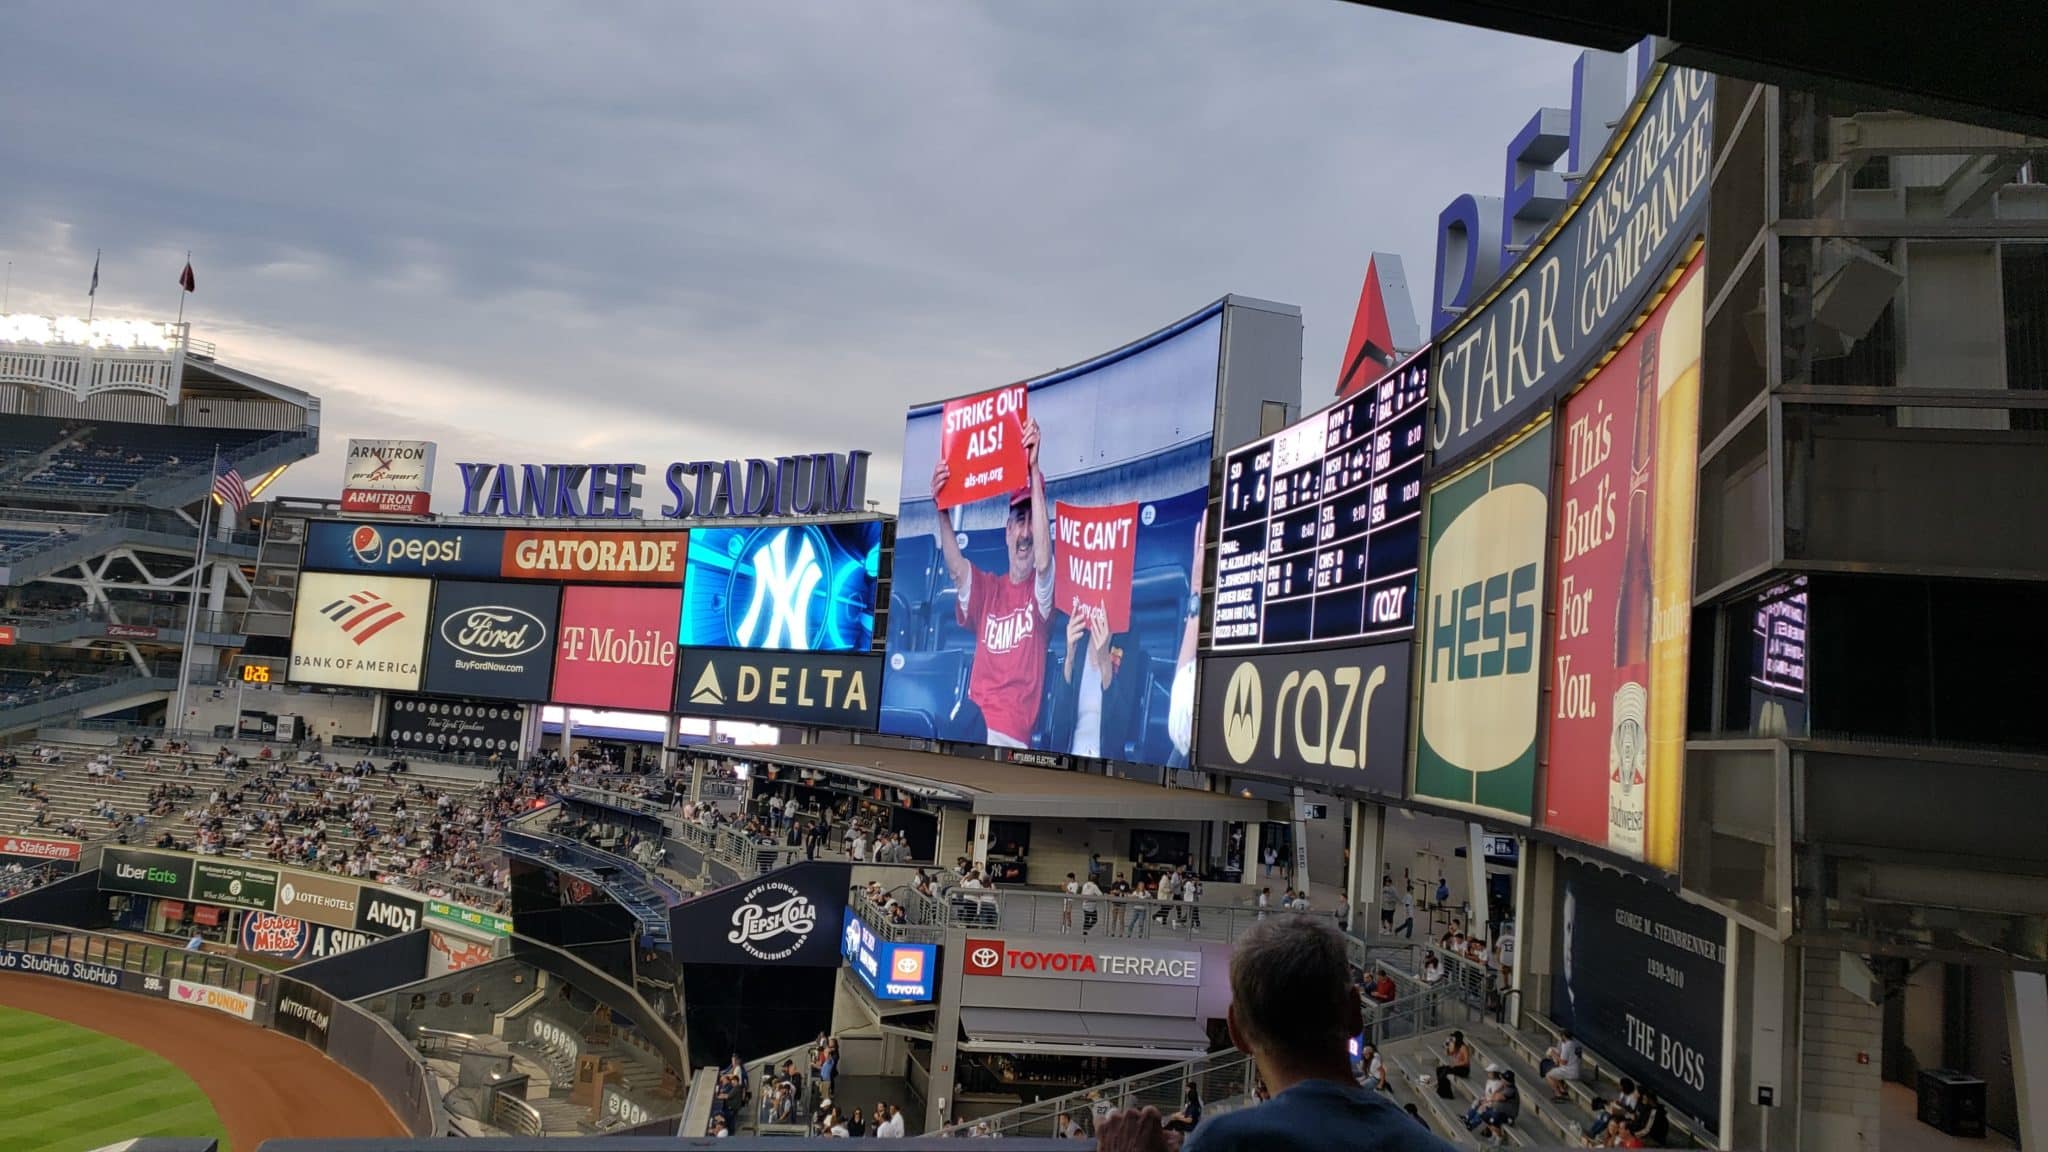 Lou Gehrig Day at Yankee Stadium 2021